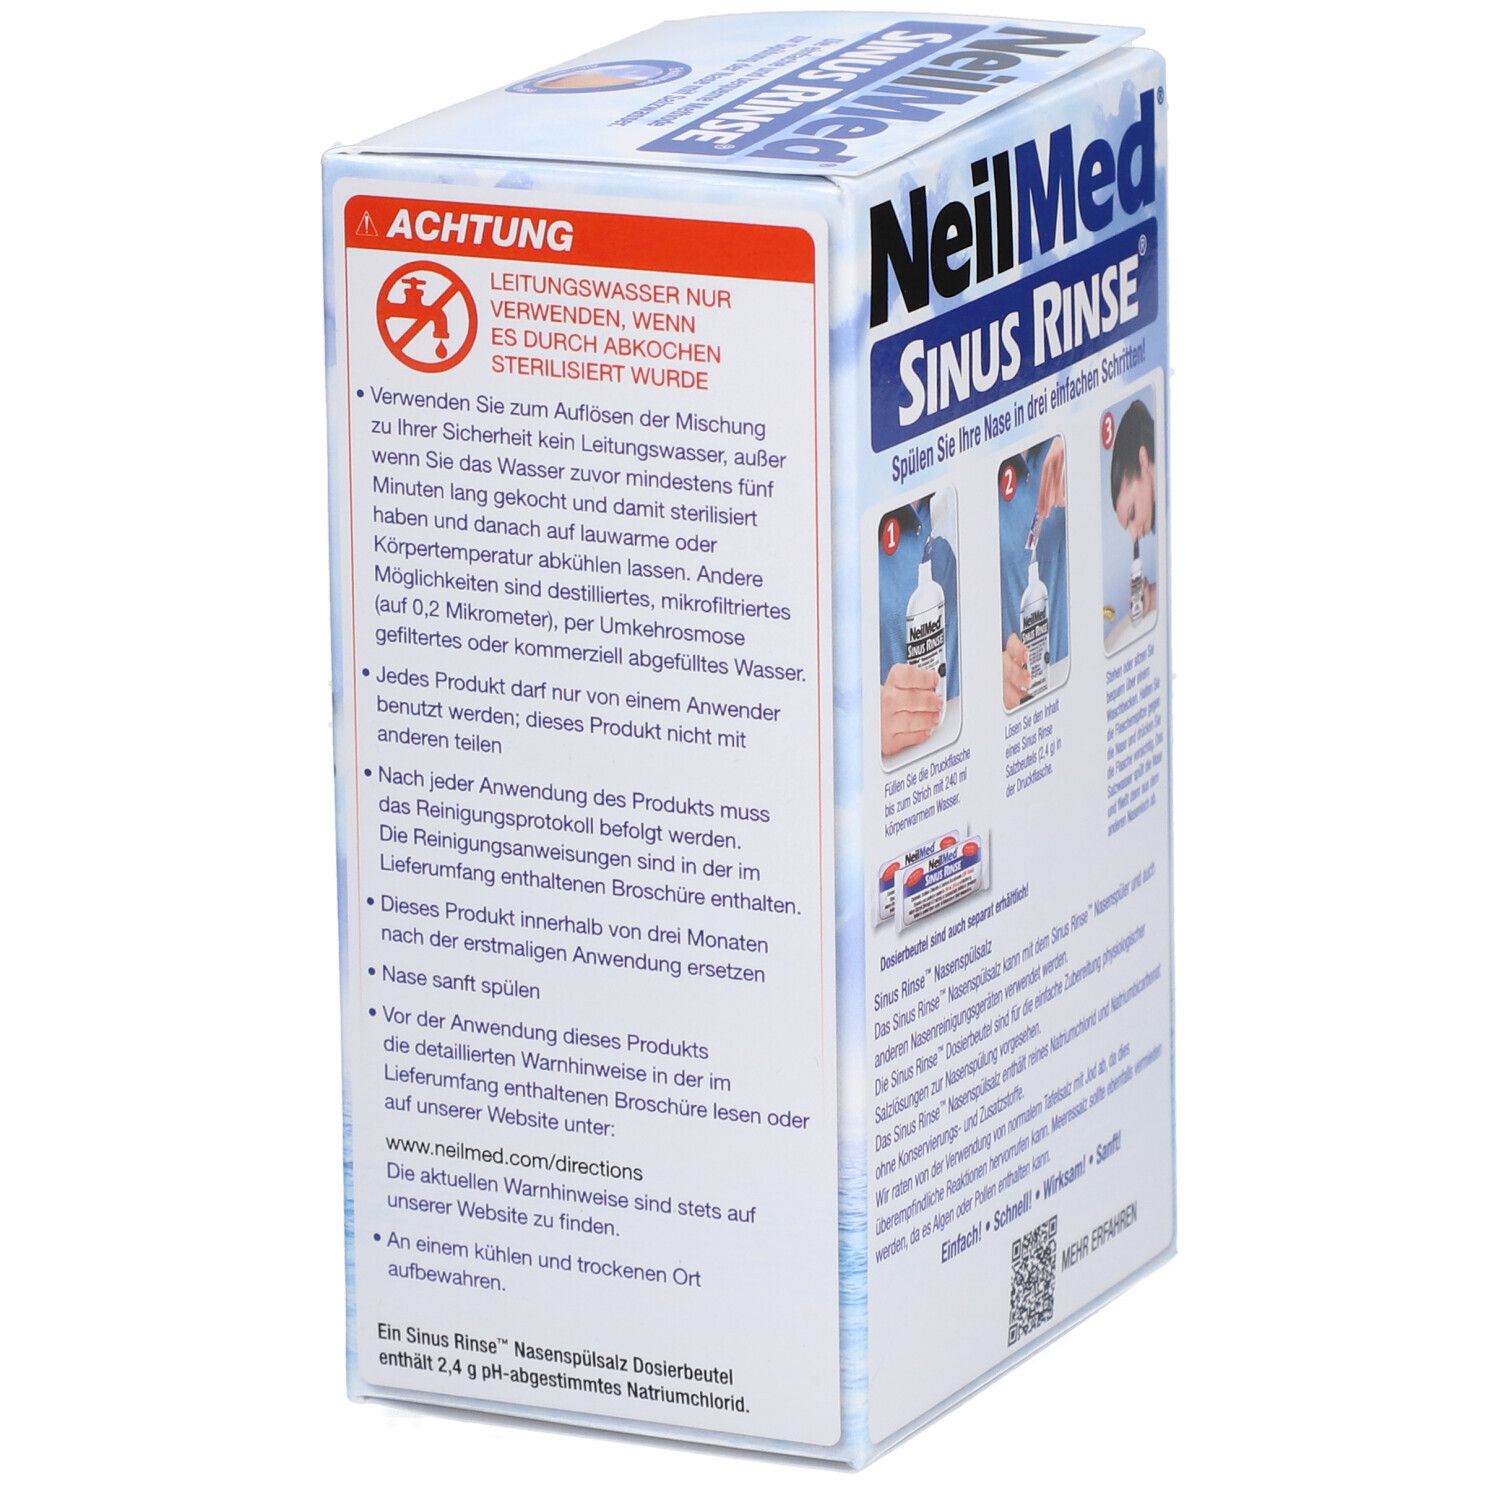 NEILMED Sinus Rinse Nasendusche + Spülsalz